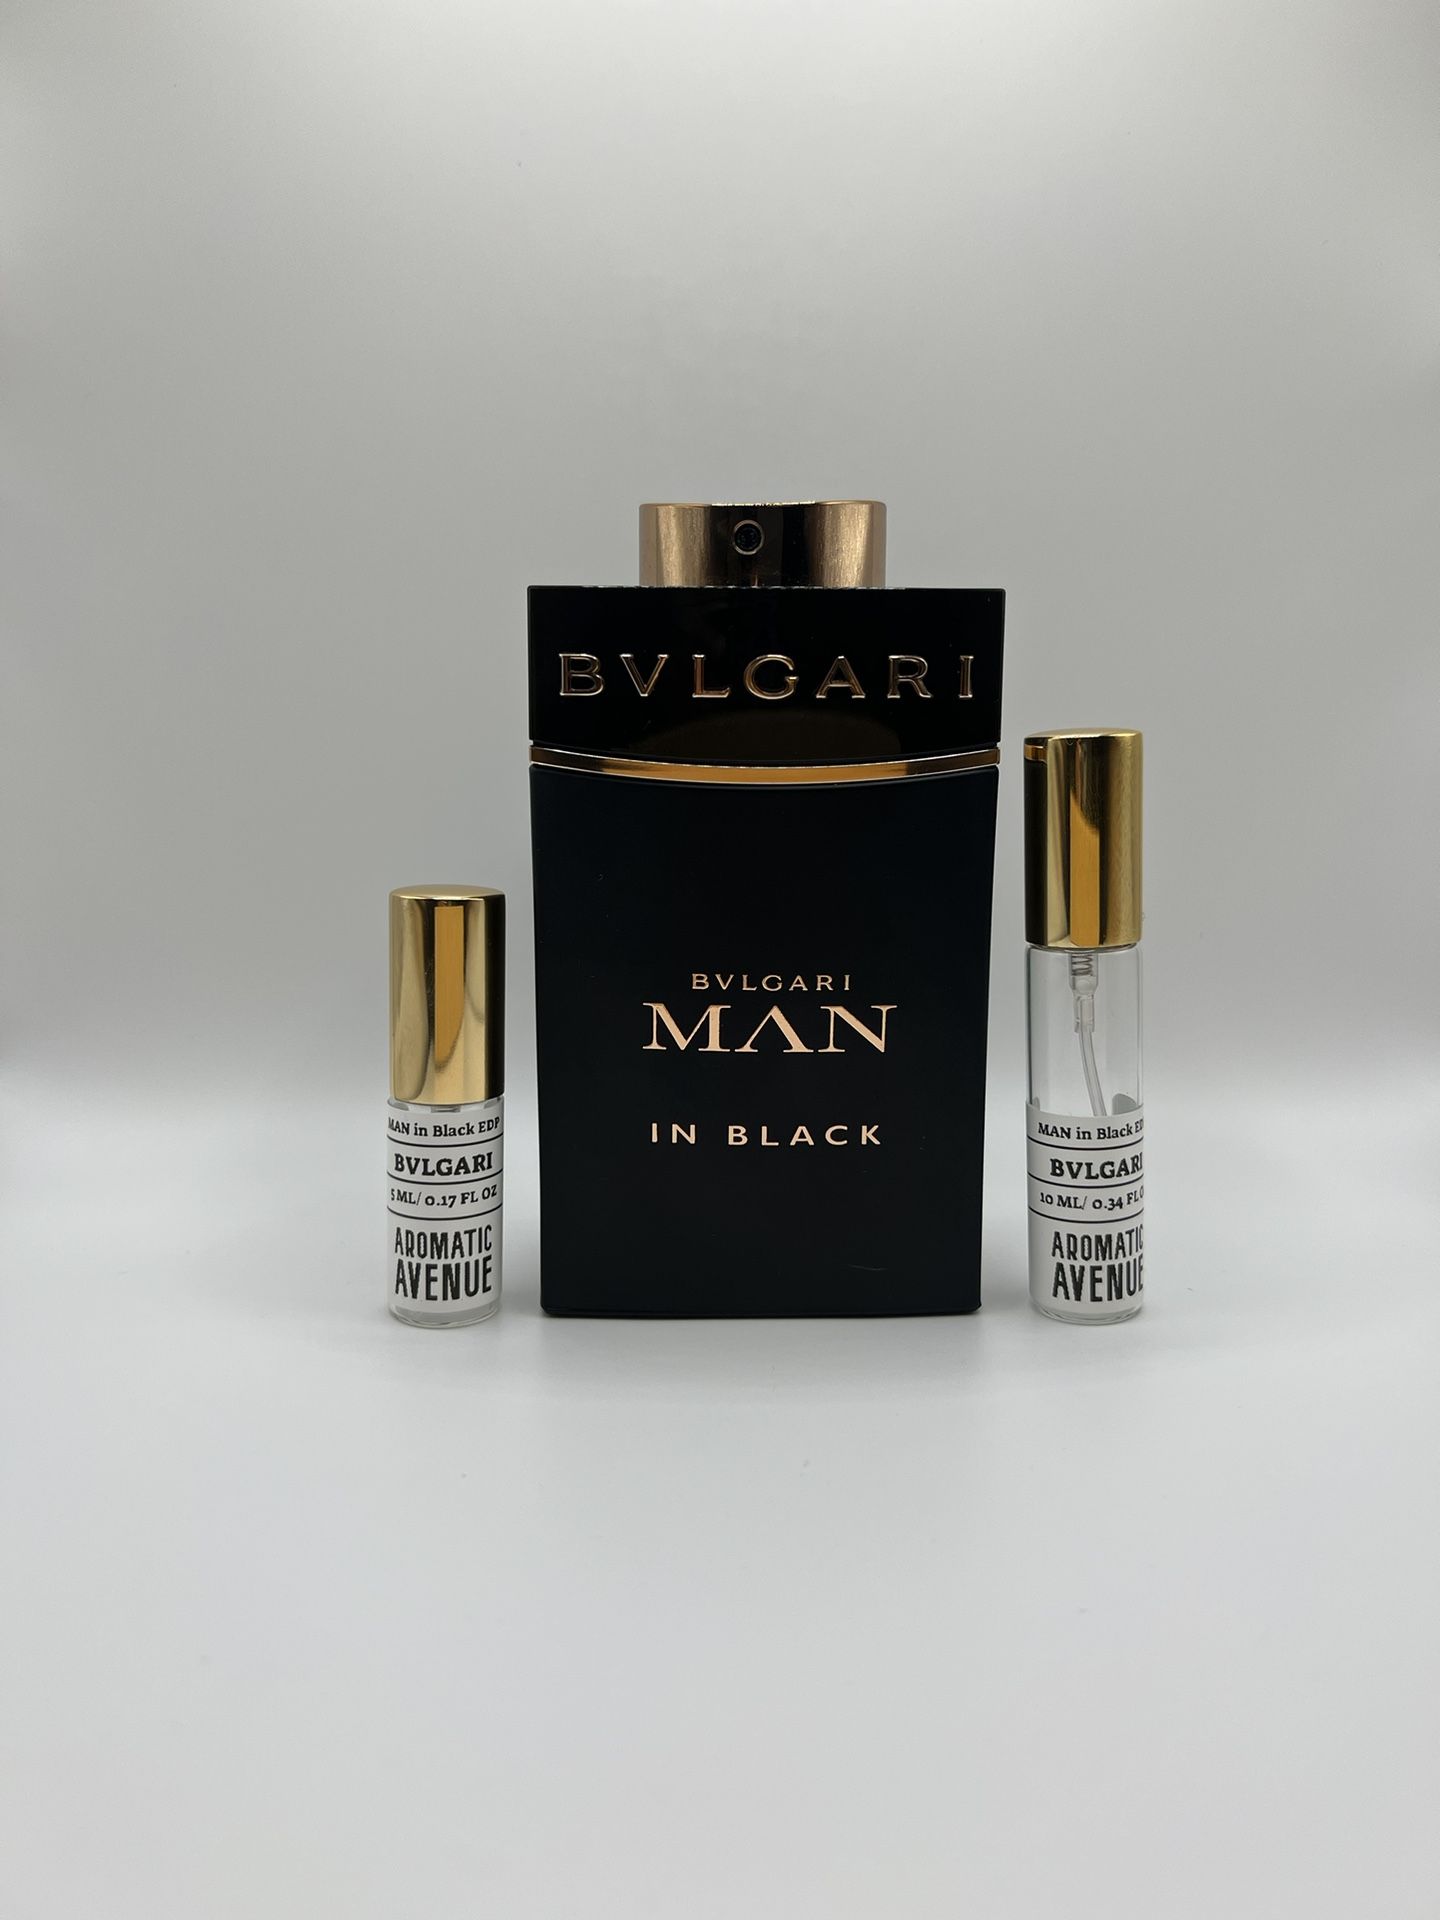 Bvlgari Man In Black EDP Fragrance Glass Decant Sample Spray Travel Size Vial 10ML